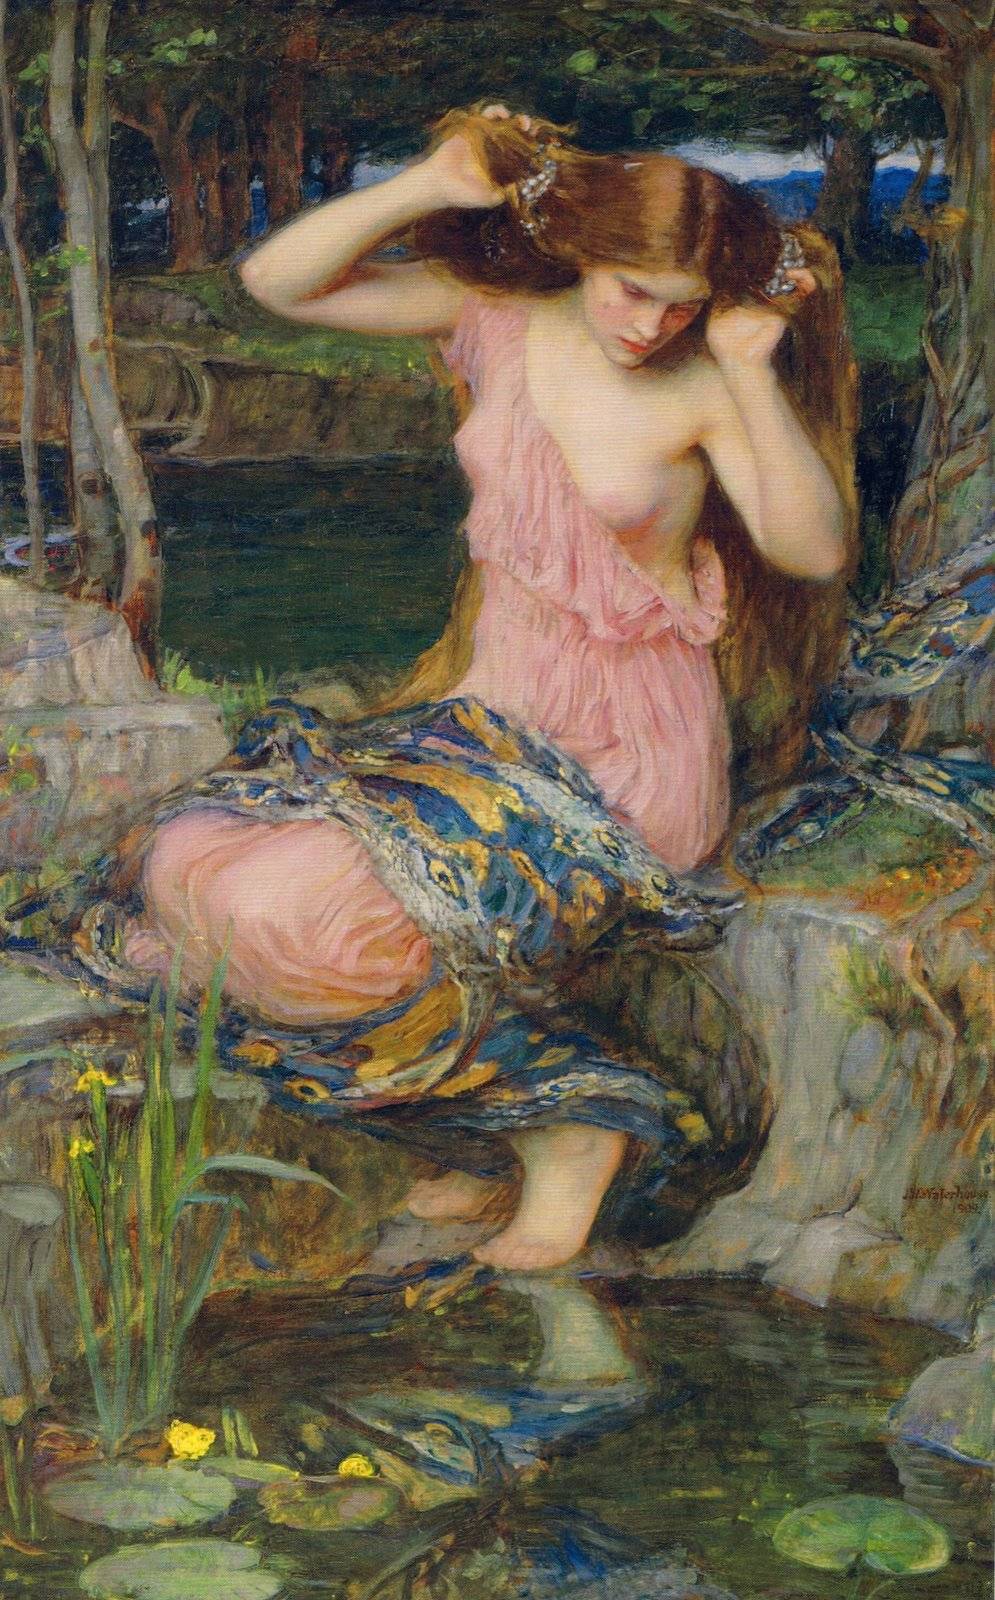 John William Waterhouse (1909)